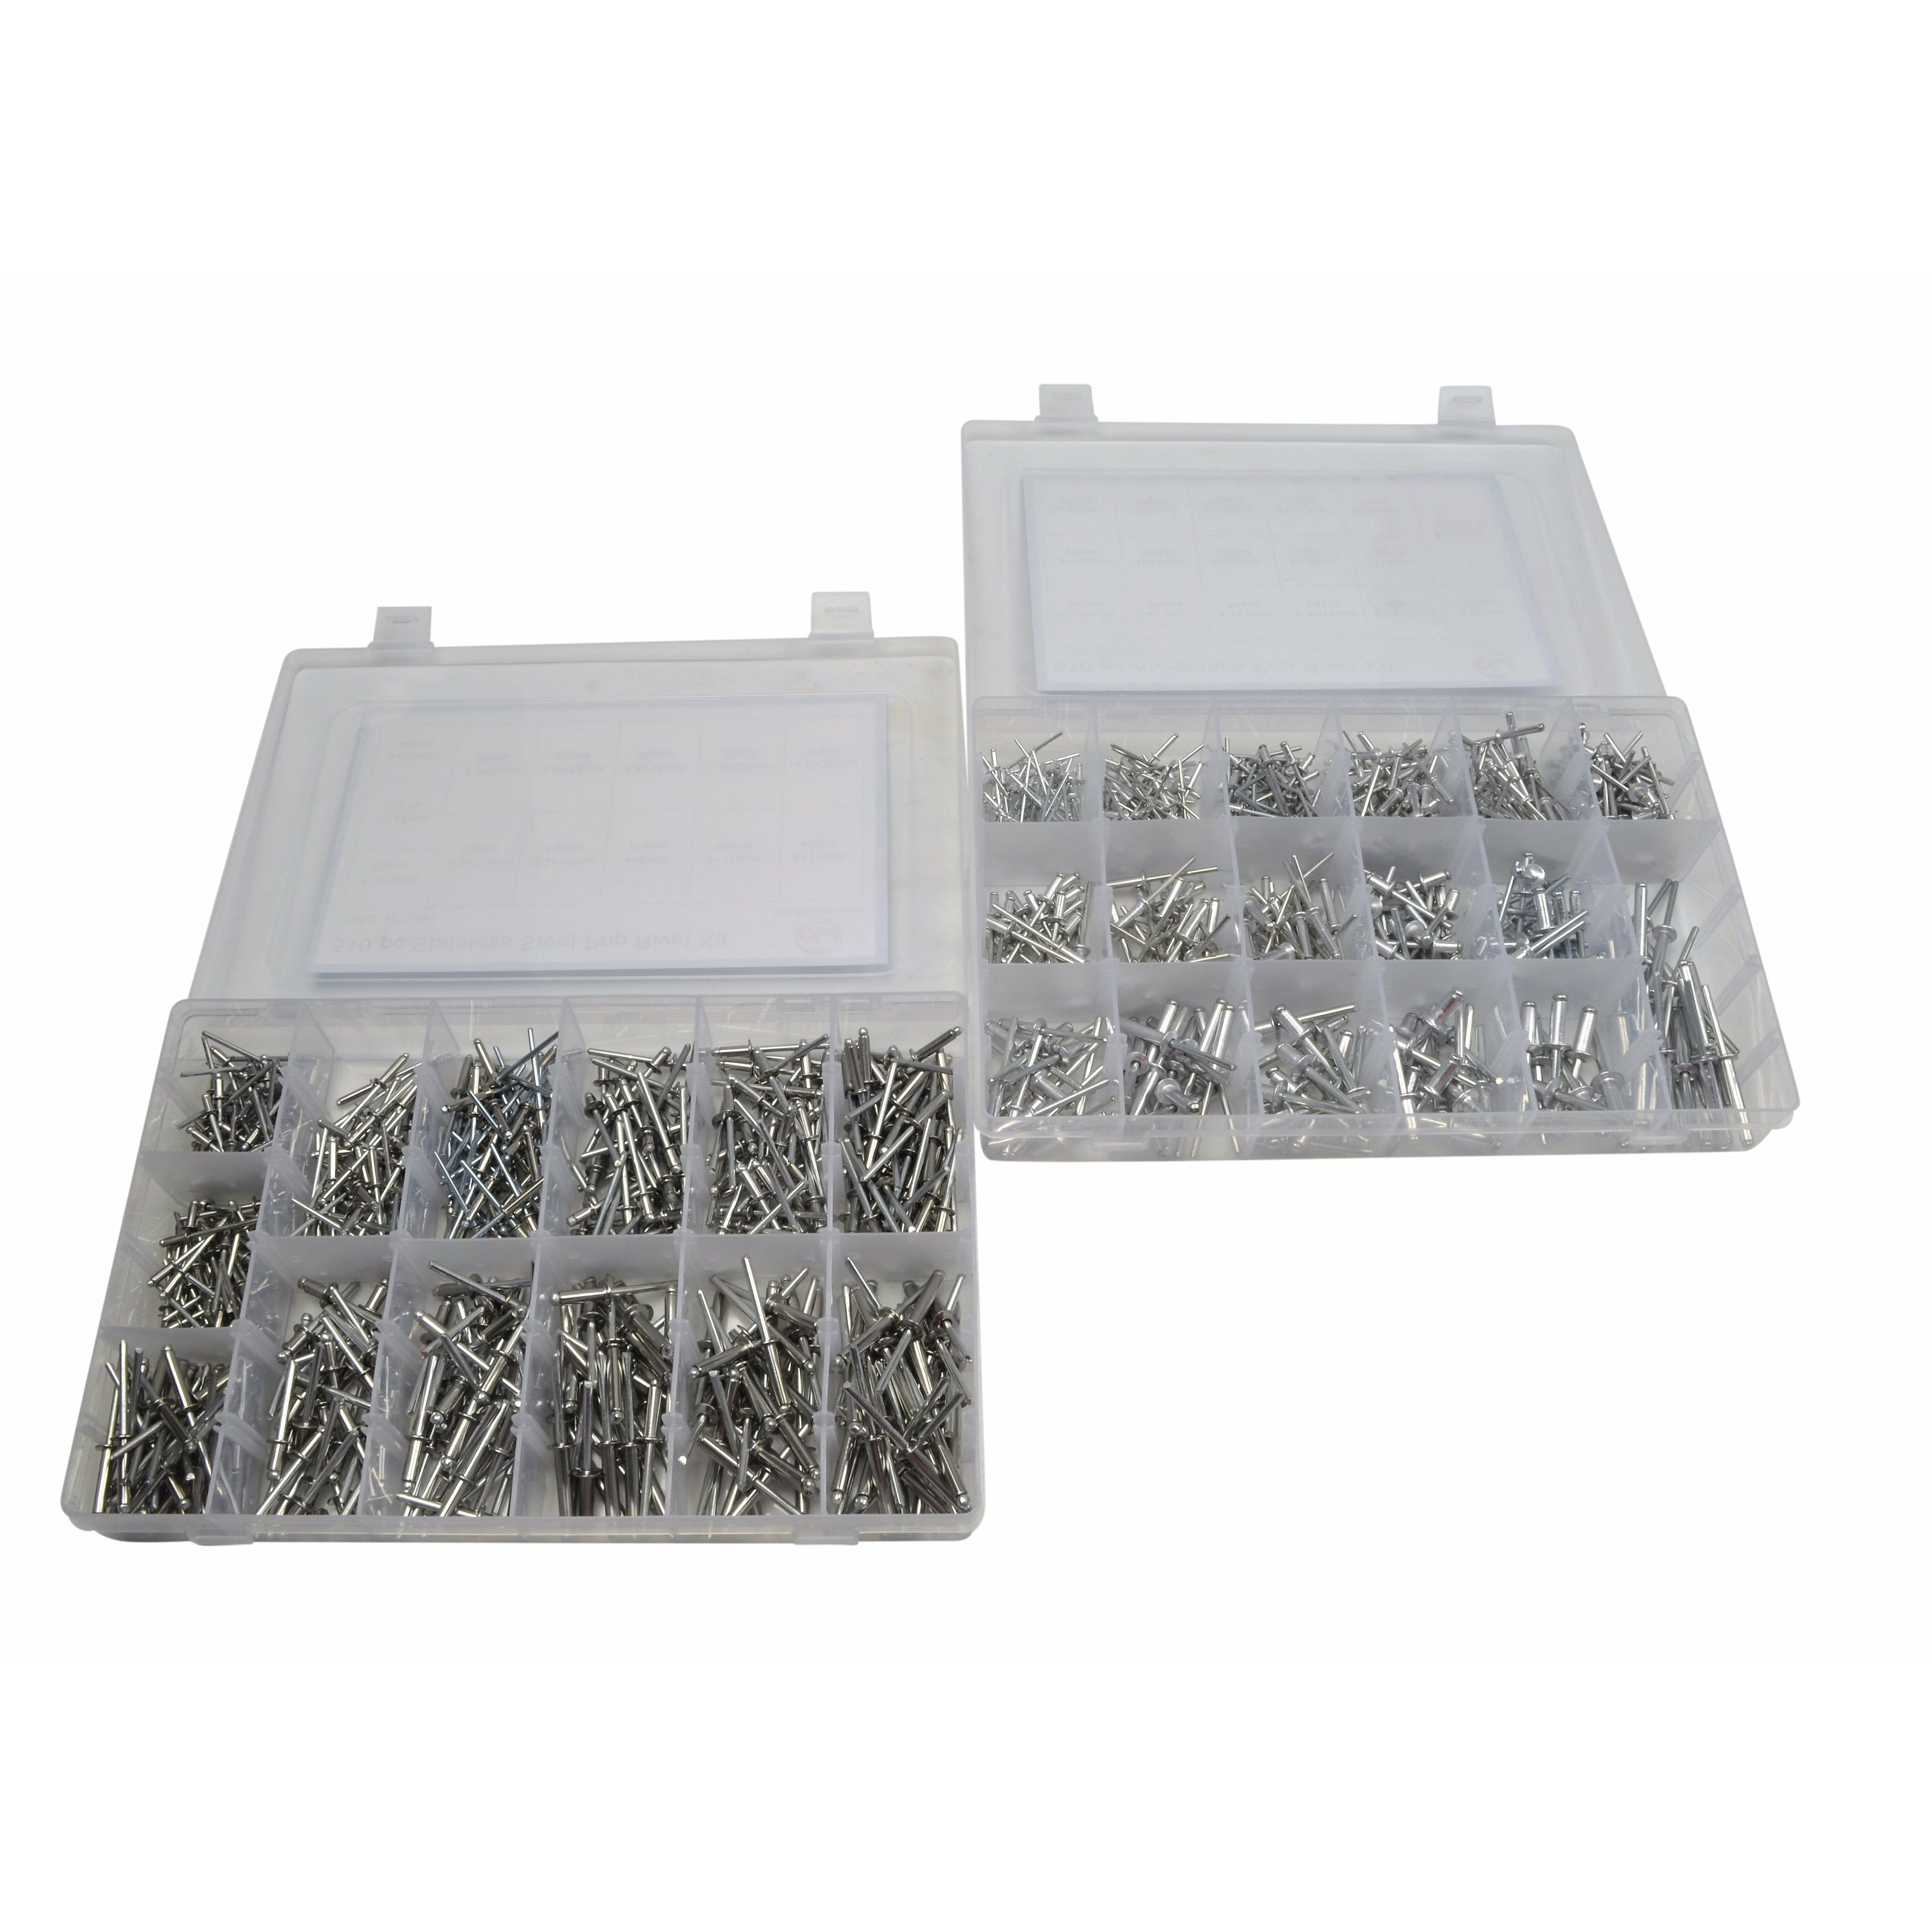 Bundle Pack 1020 Piece Aluminium & Stainless Steel Pop Rivet Grab Kit Assortment